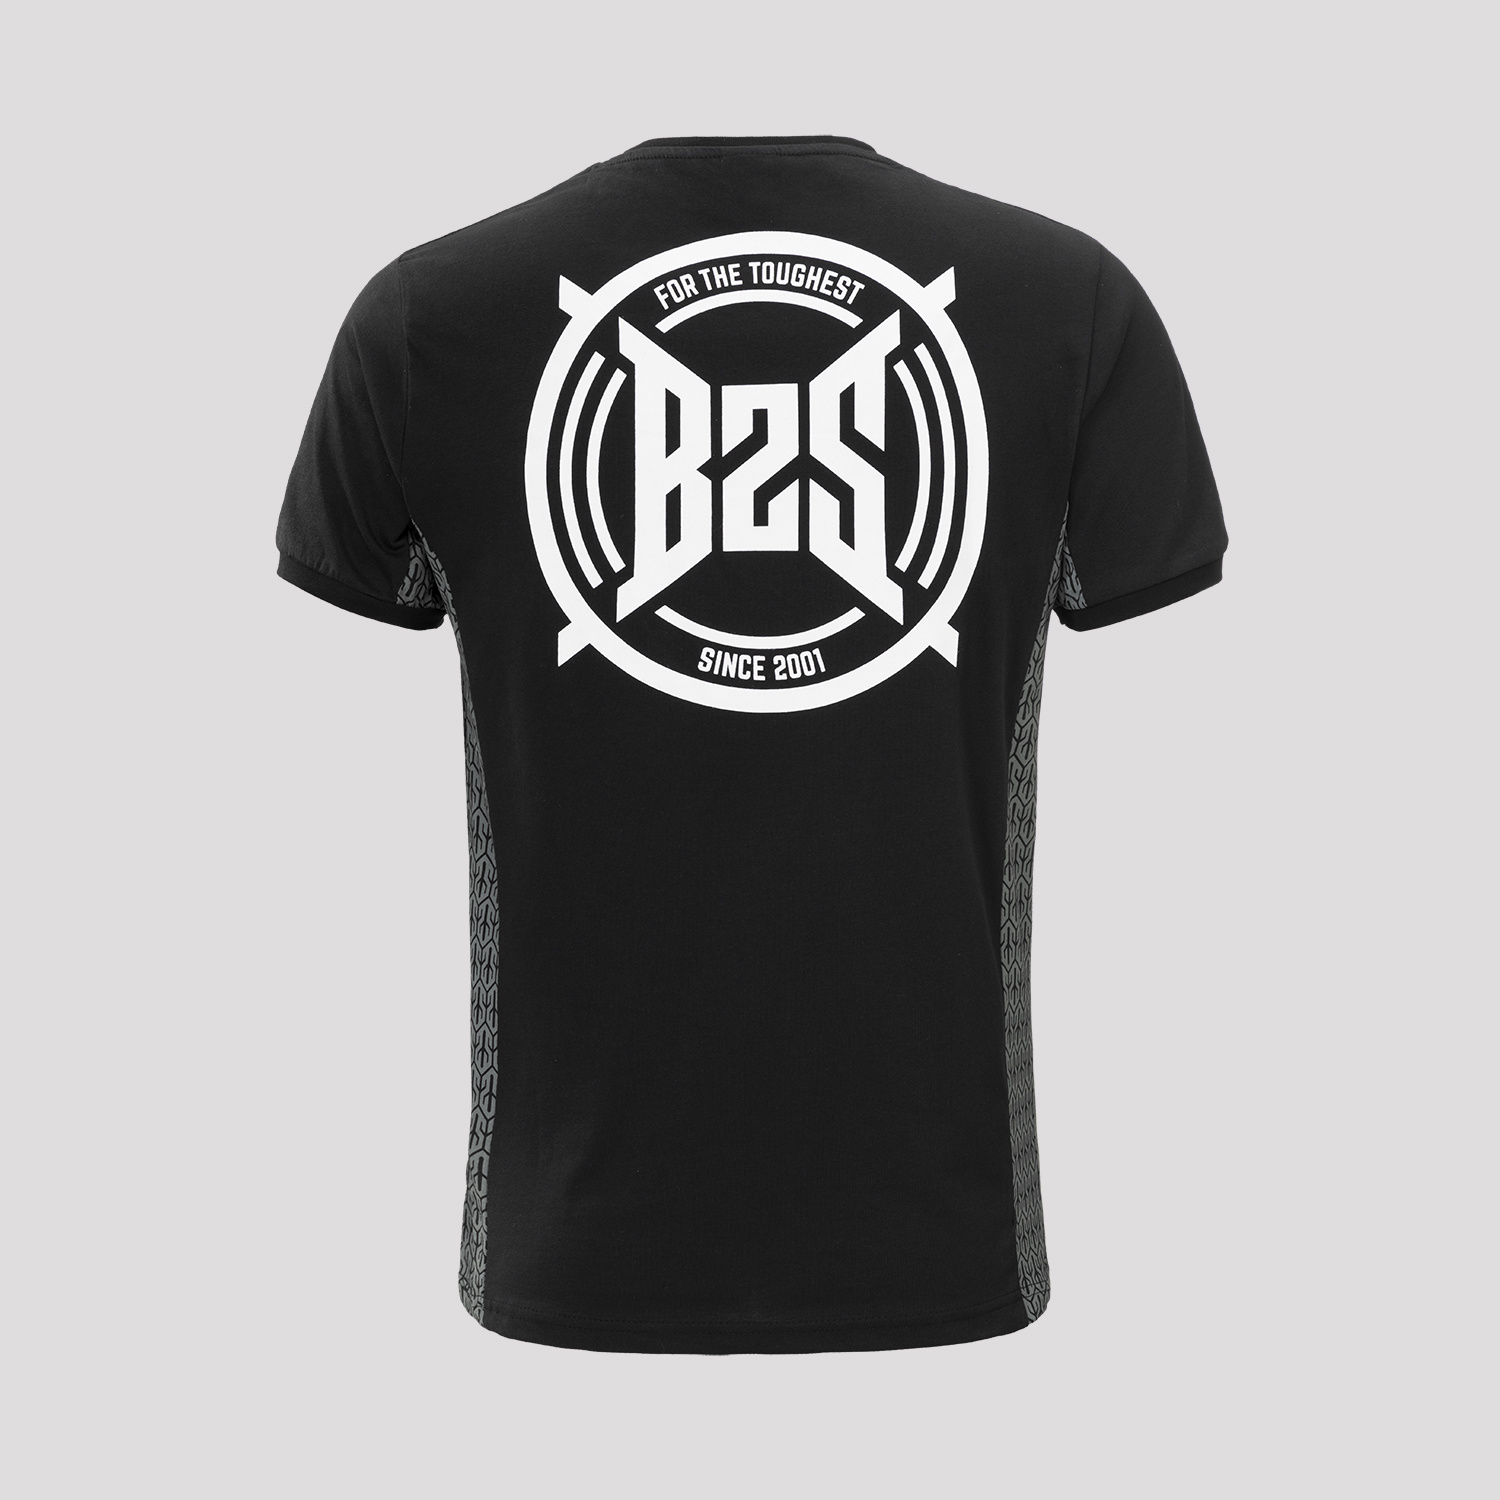 B2S t-shirt black/grey